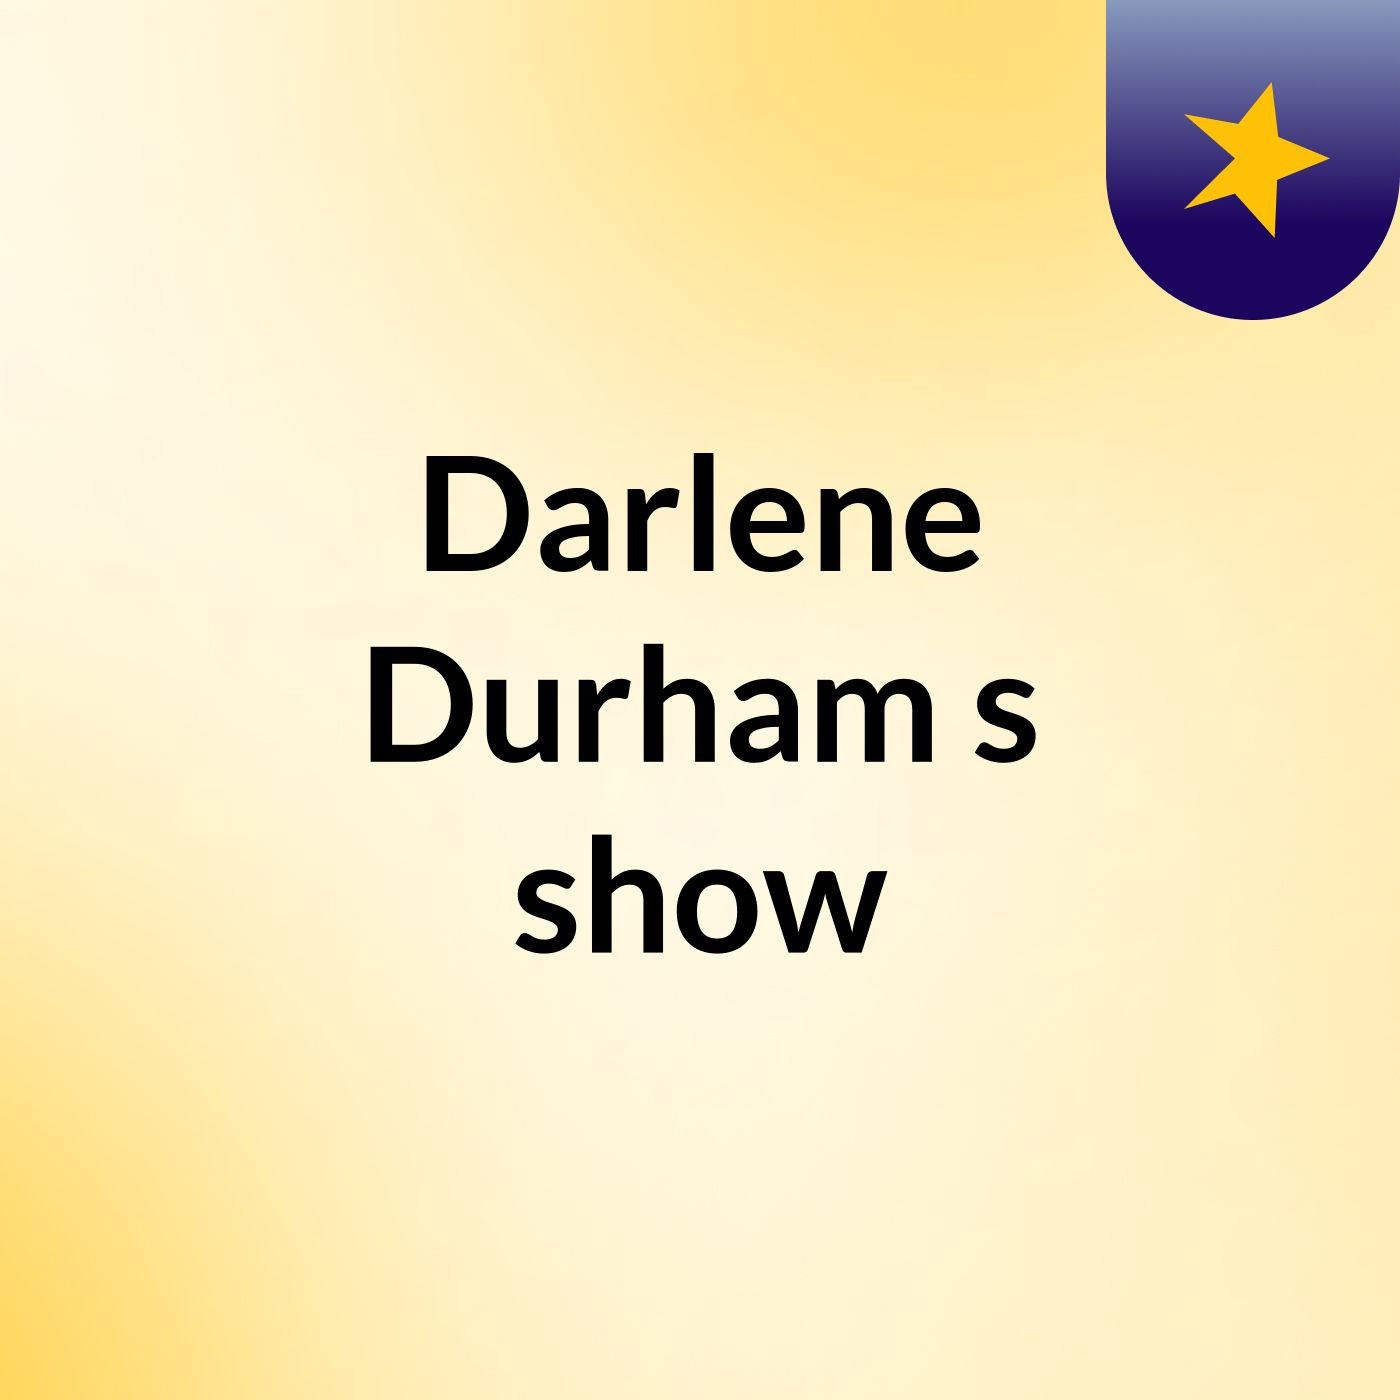 Darlene Durham's show